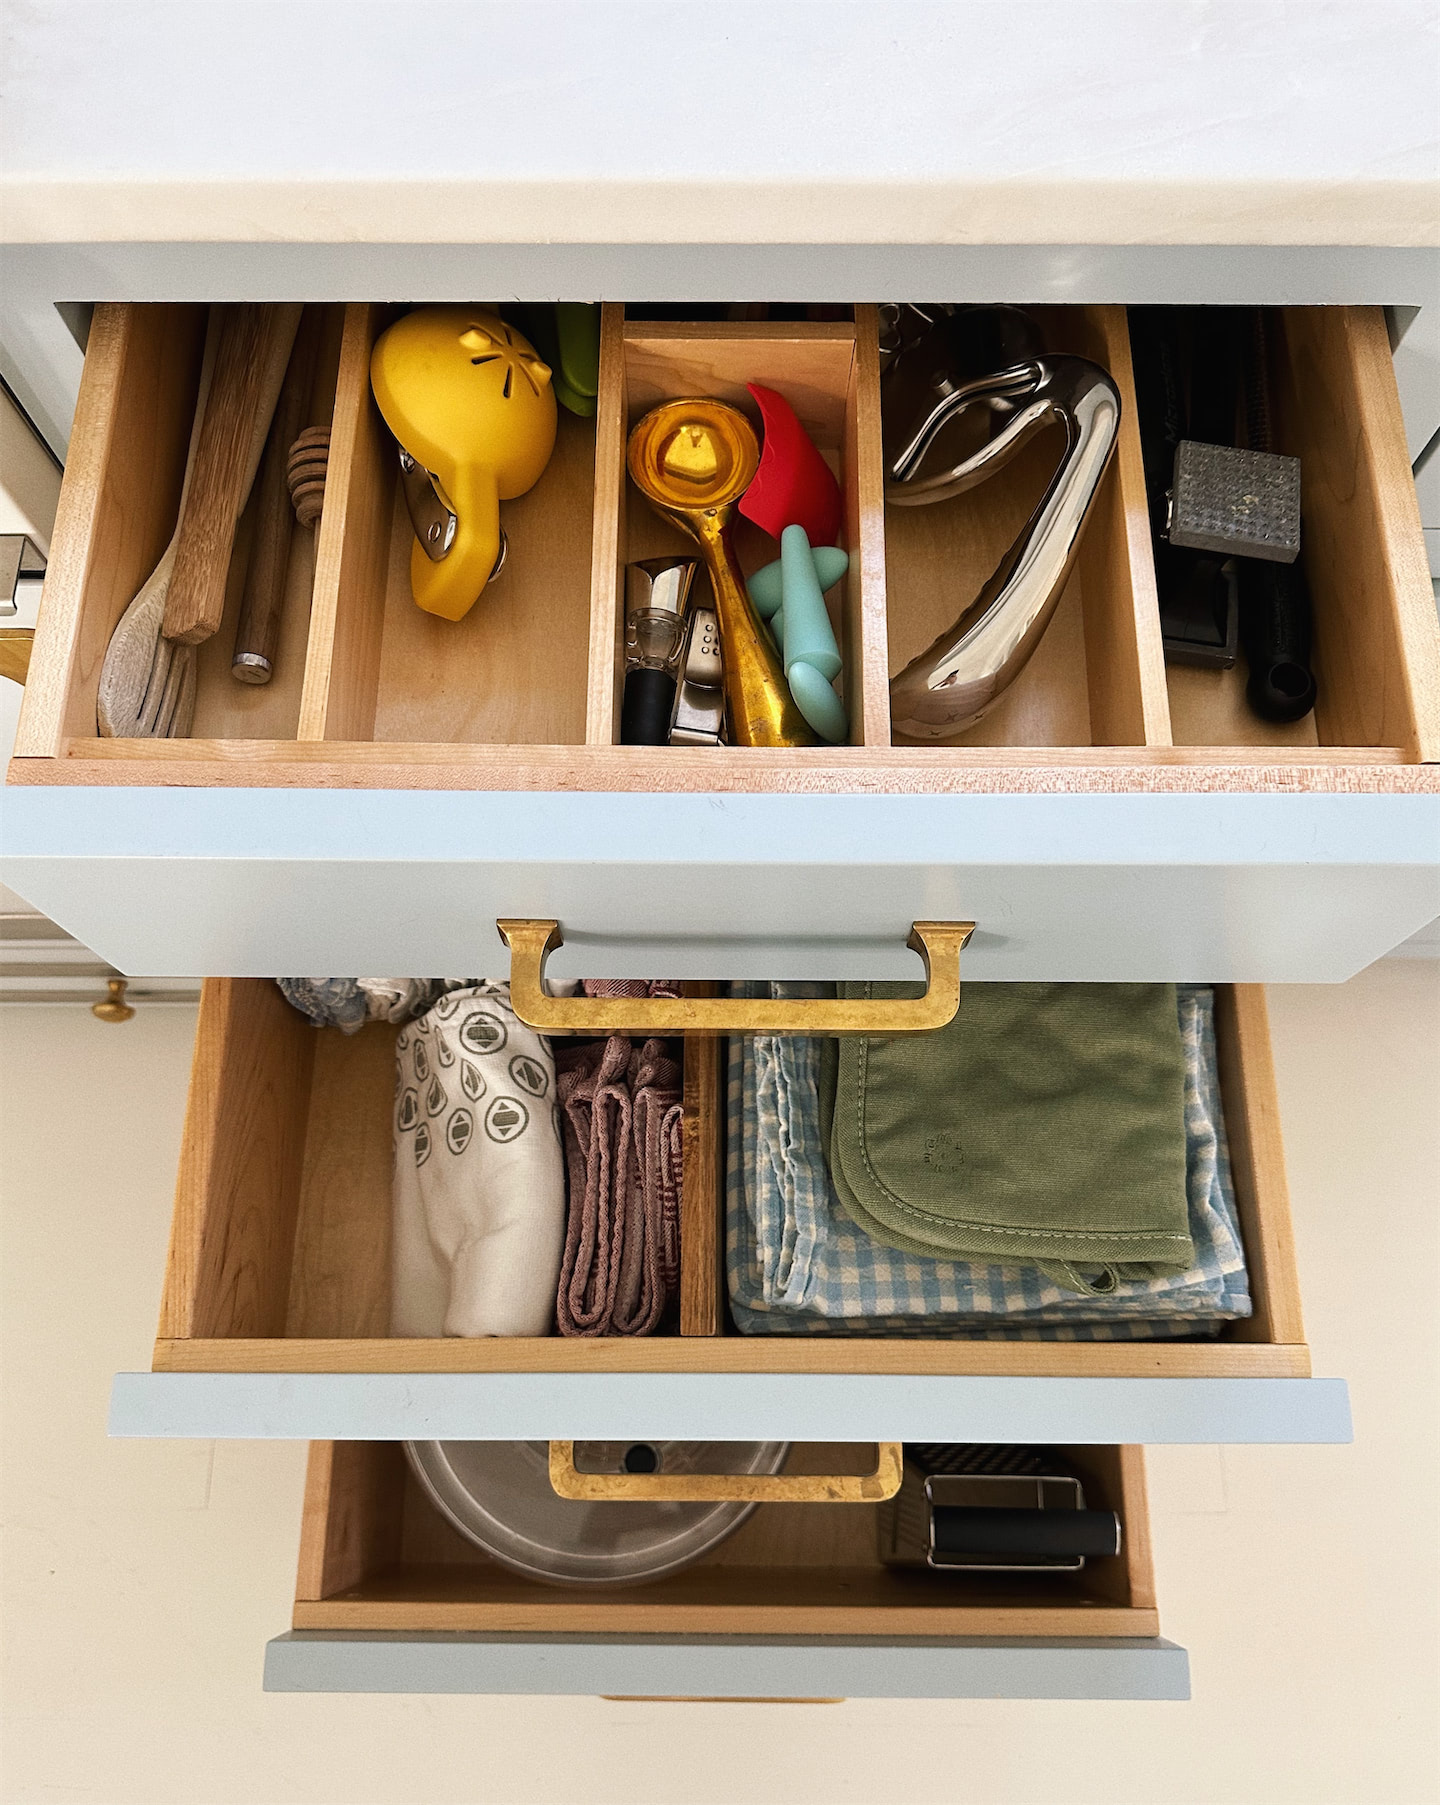 Organization of kitchen drawers